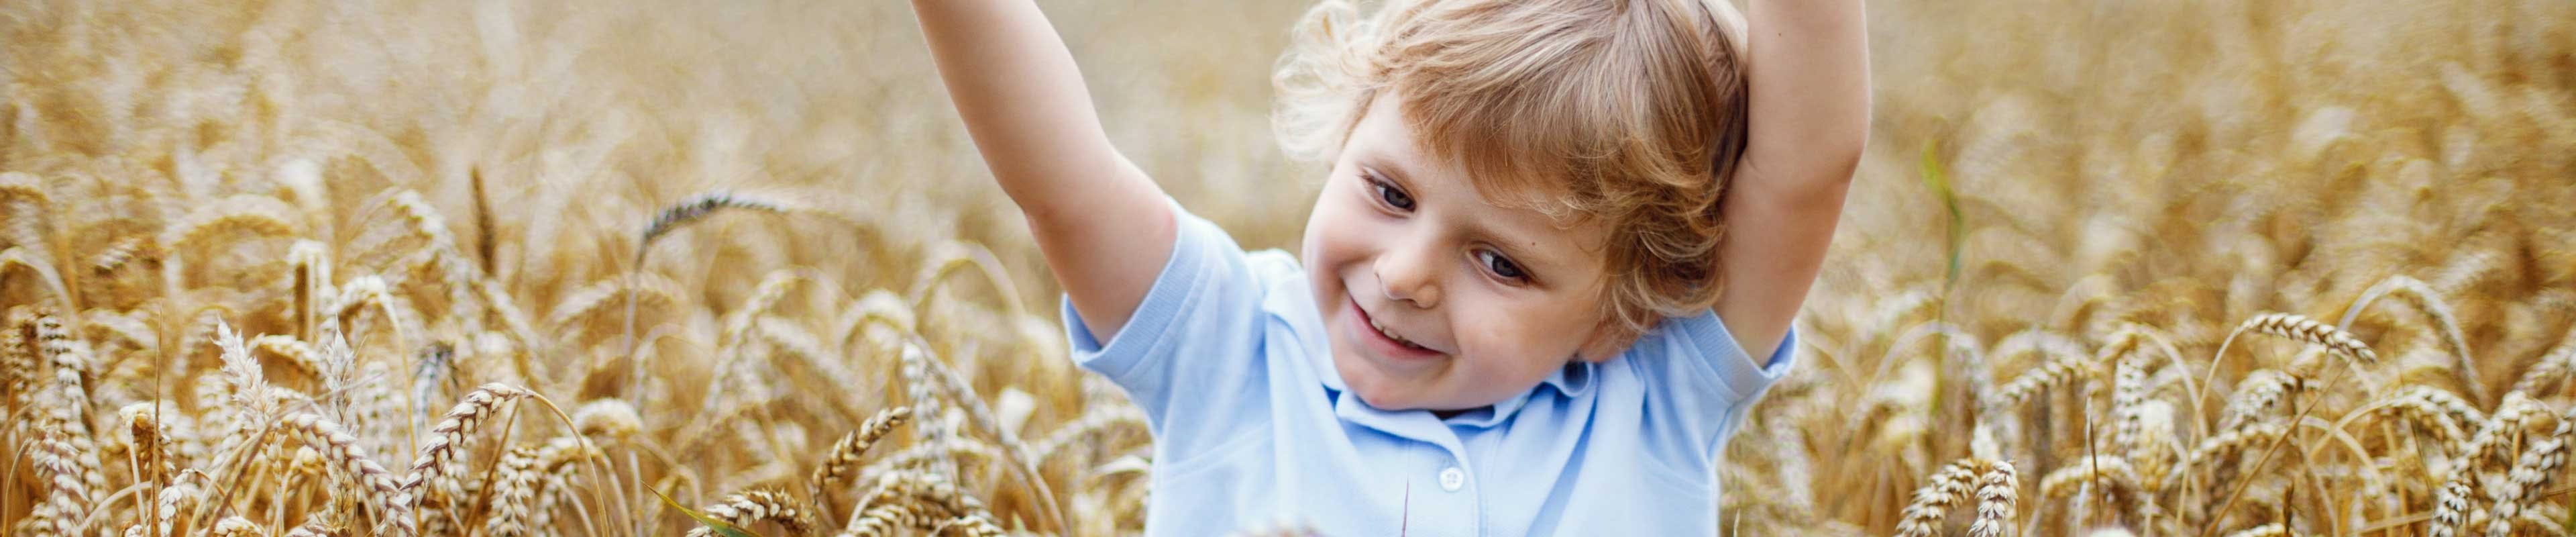 Little boy playing in a field of wheat